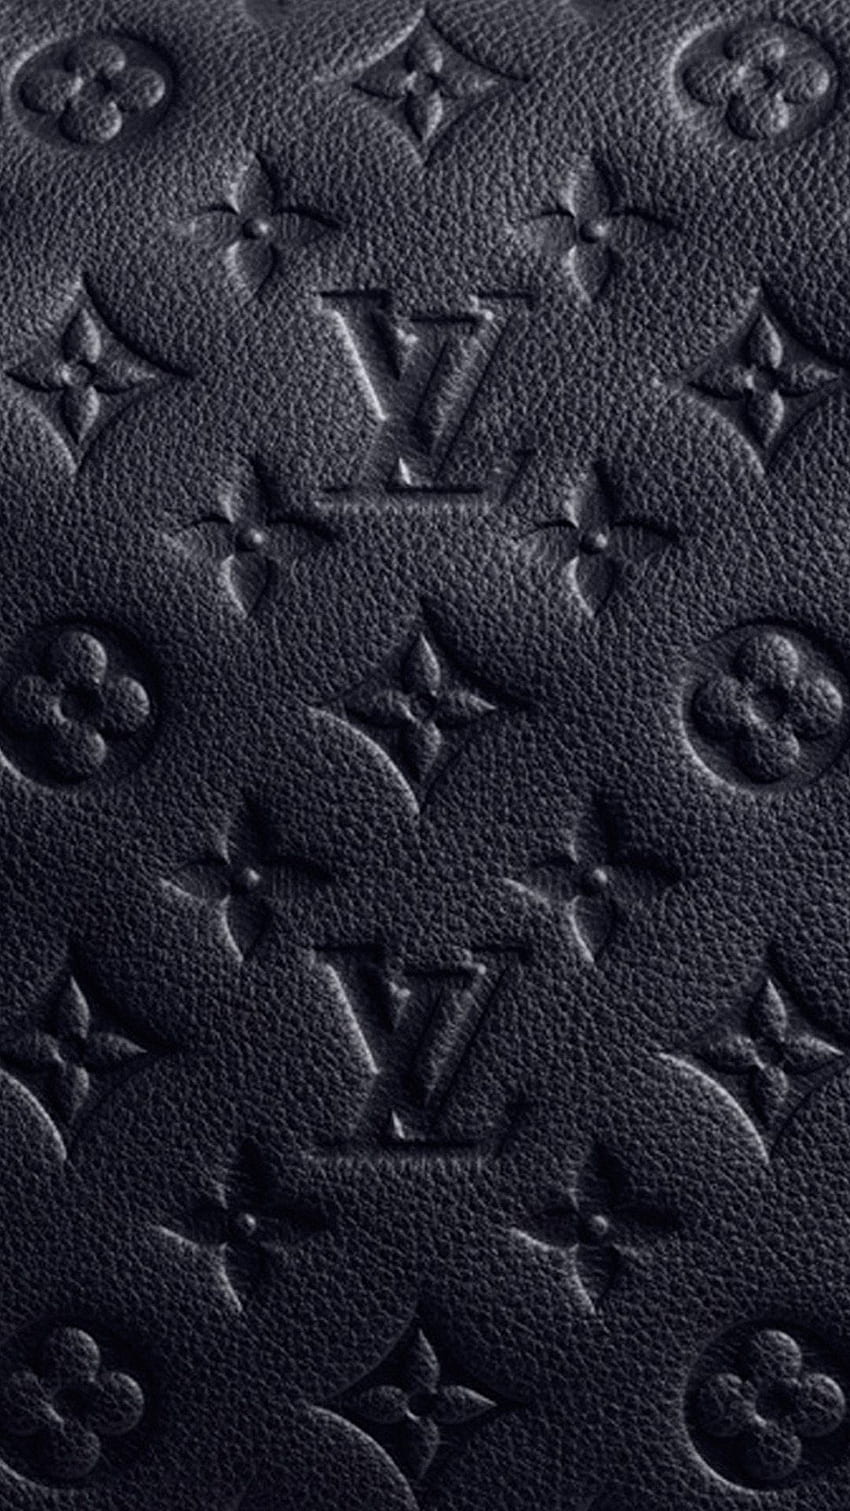 Lv, Kulit Louis Vuitton wallpaper ponsel HD